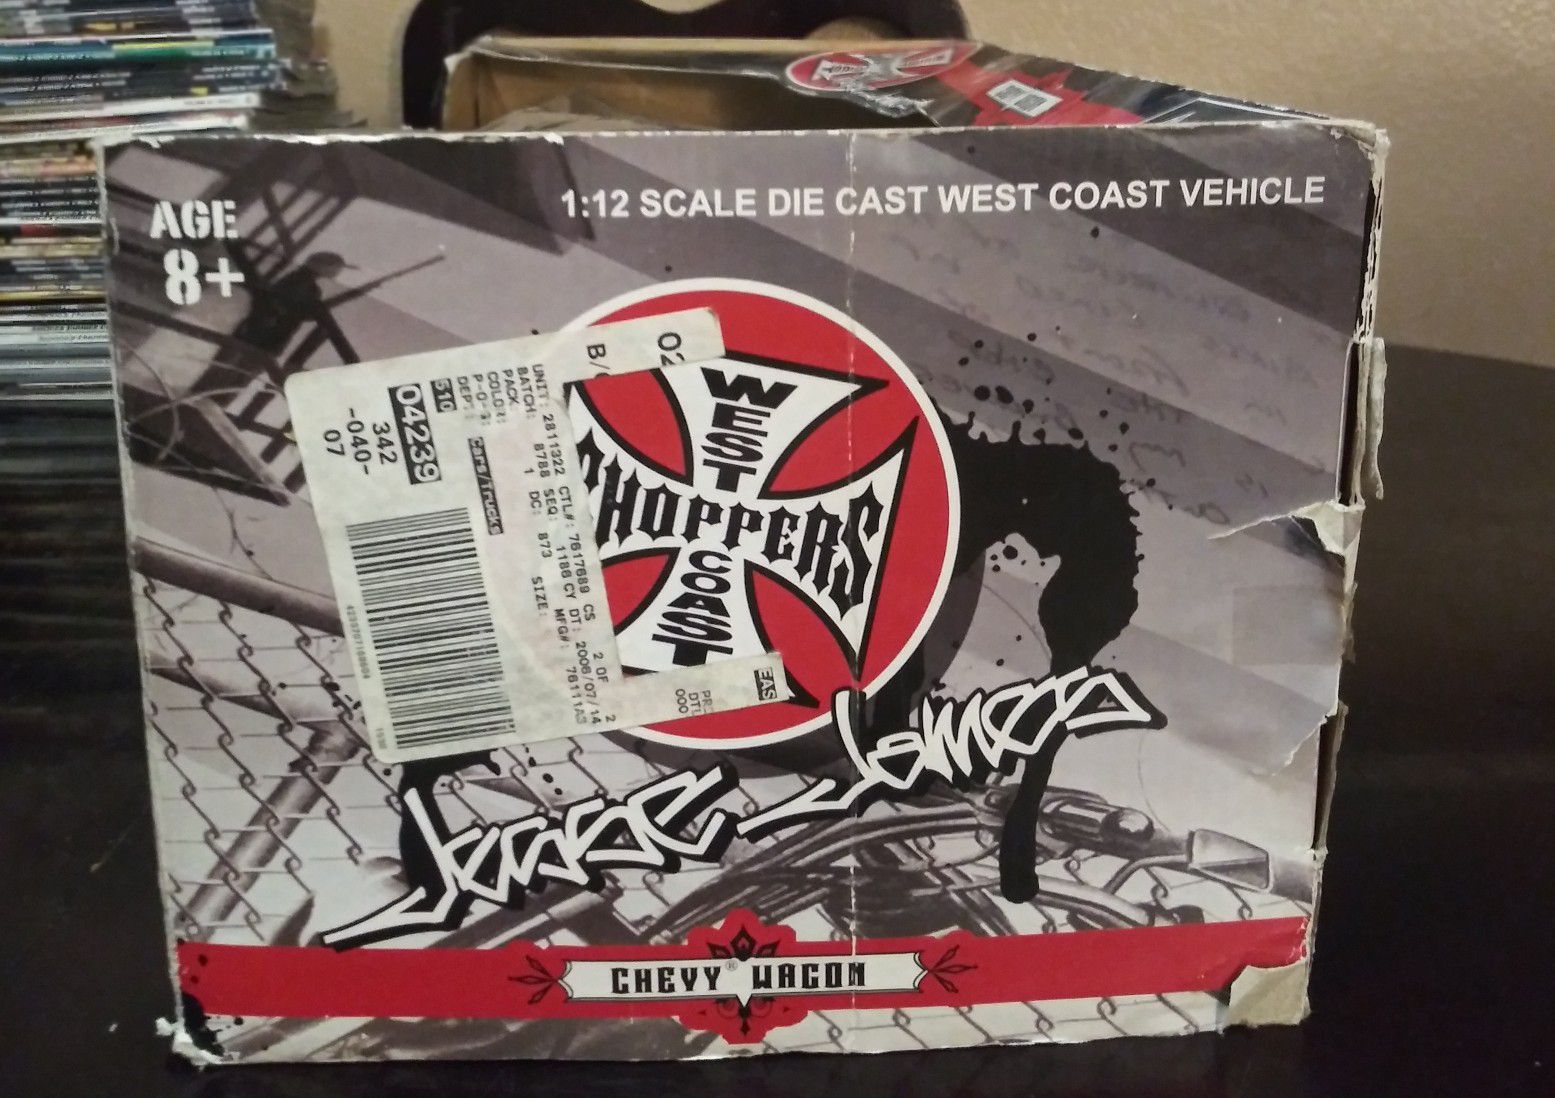 West coast choppers jesse james chevy wagon 1:12 scale